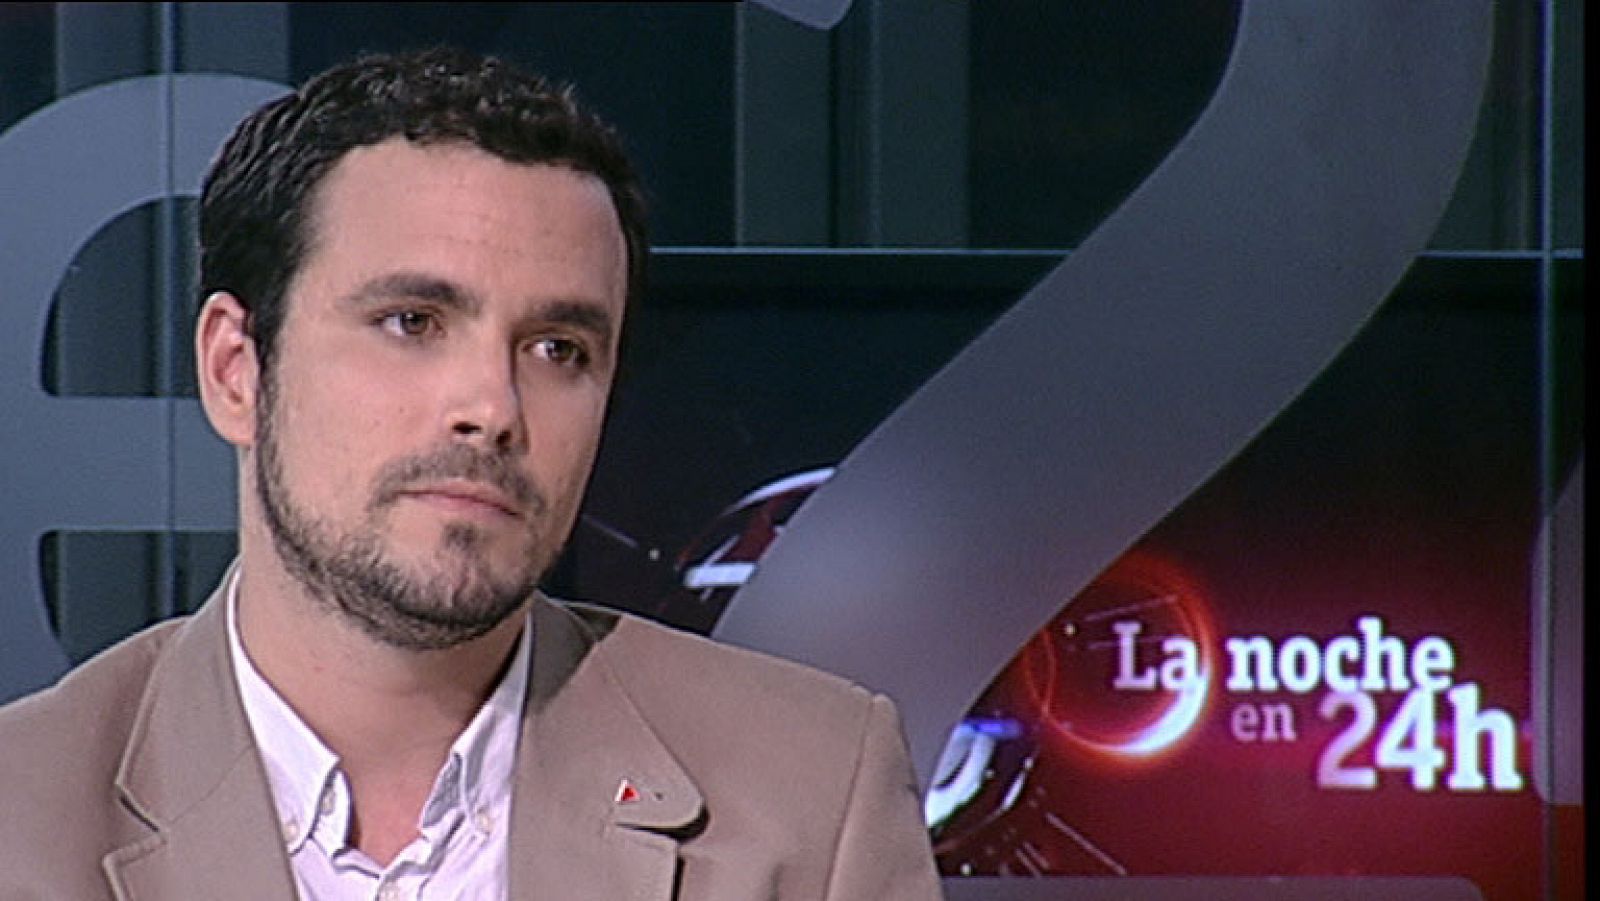 La noche en 24h: Alberto Garzón, diputado de IU | RTVE Play